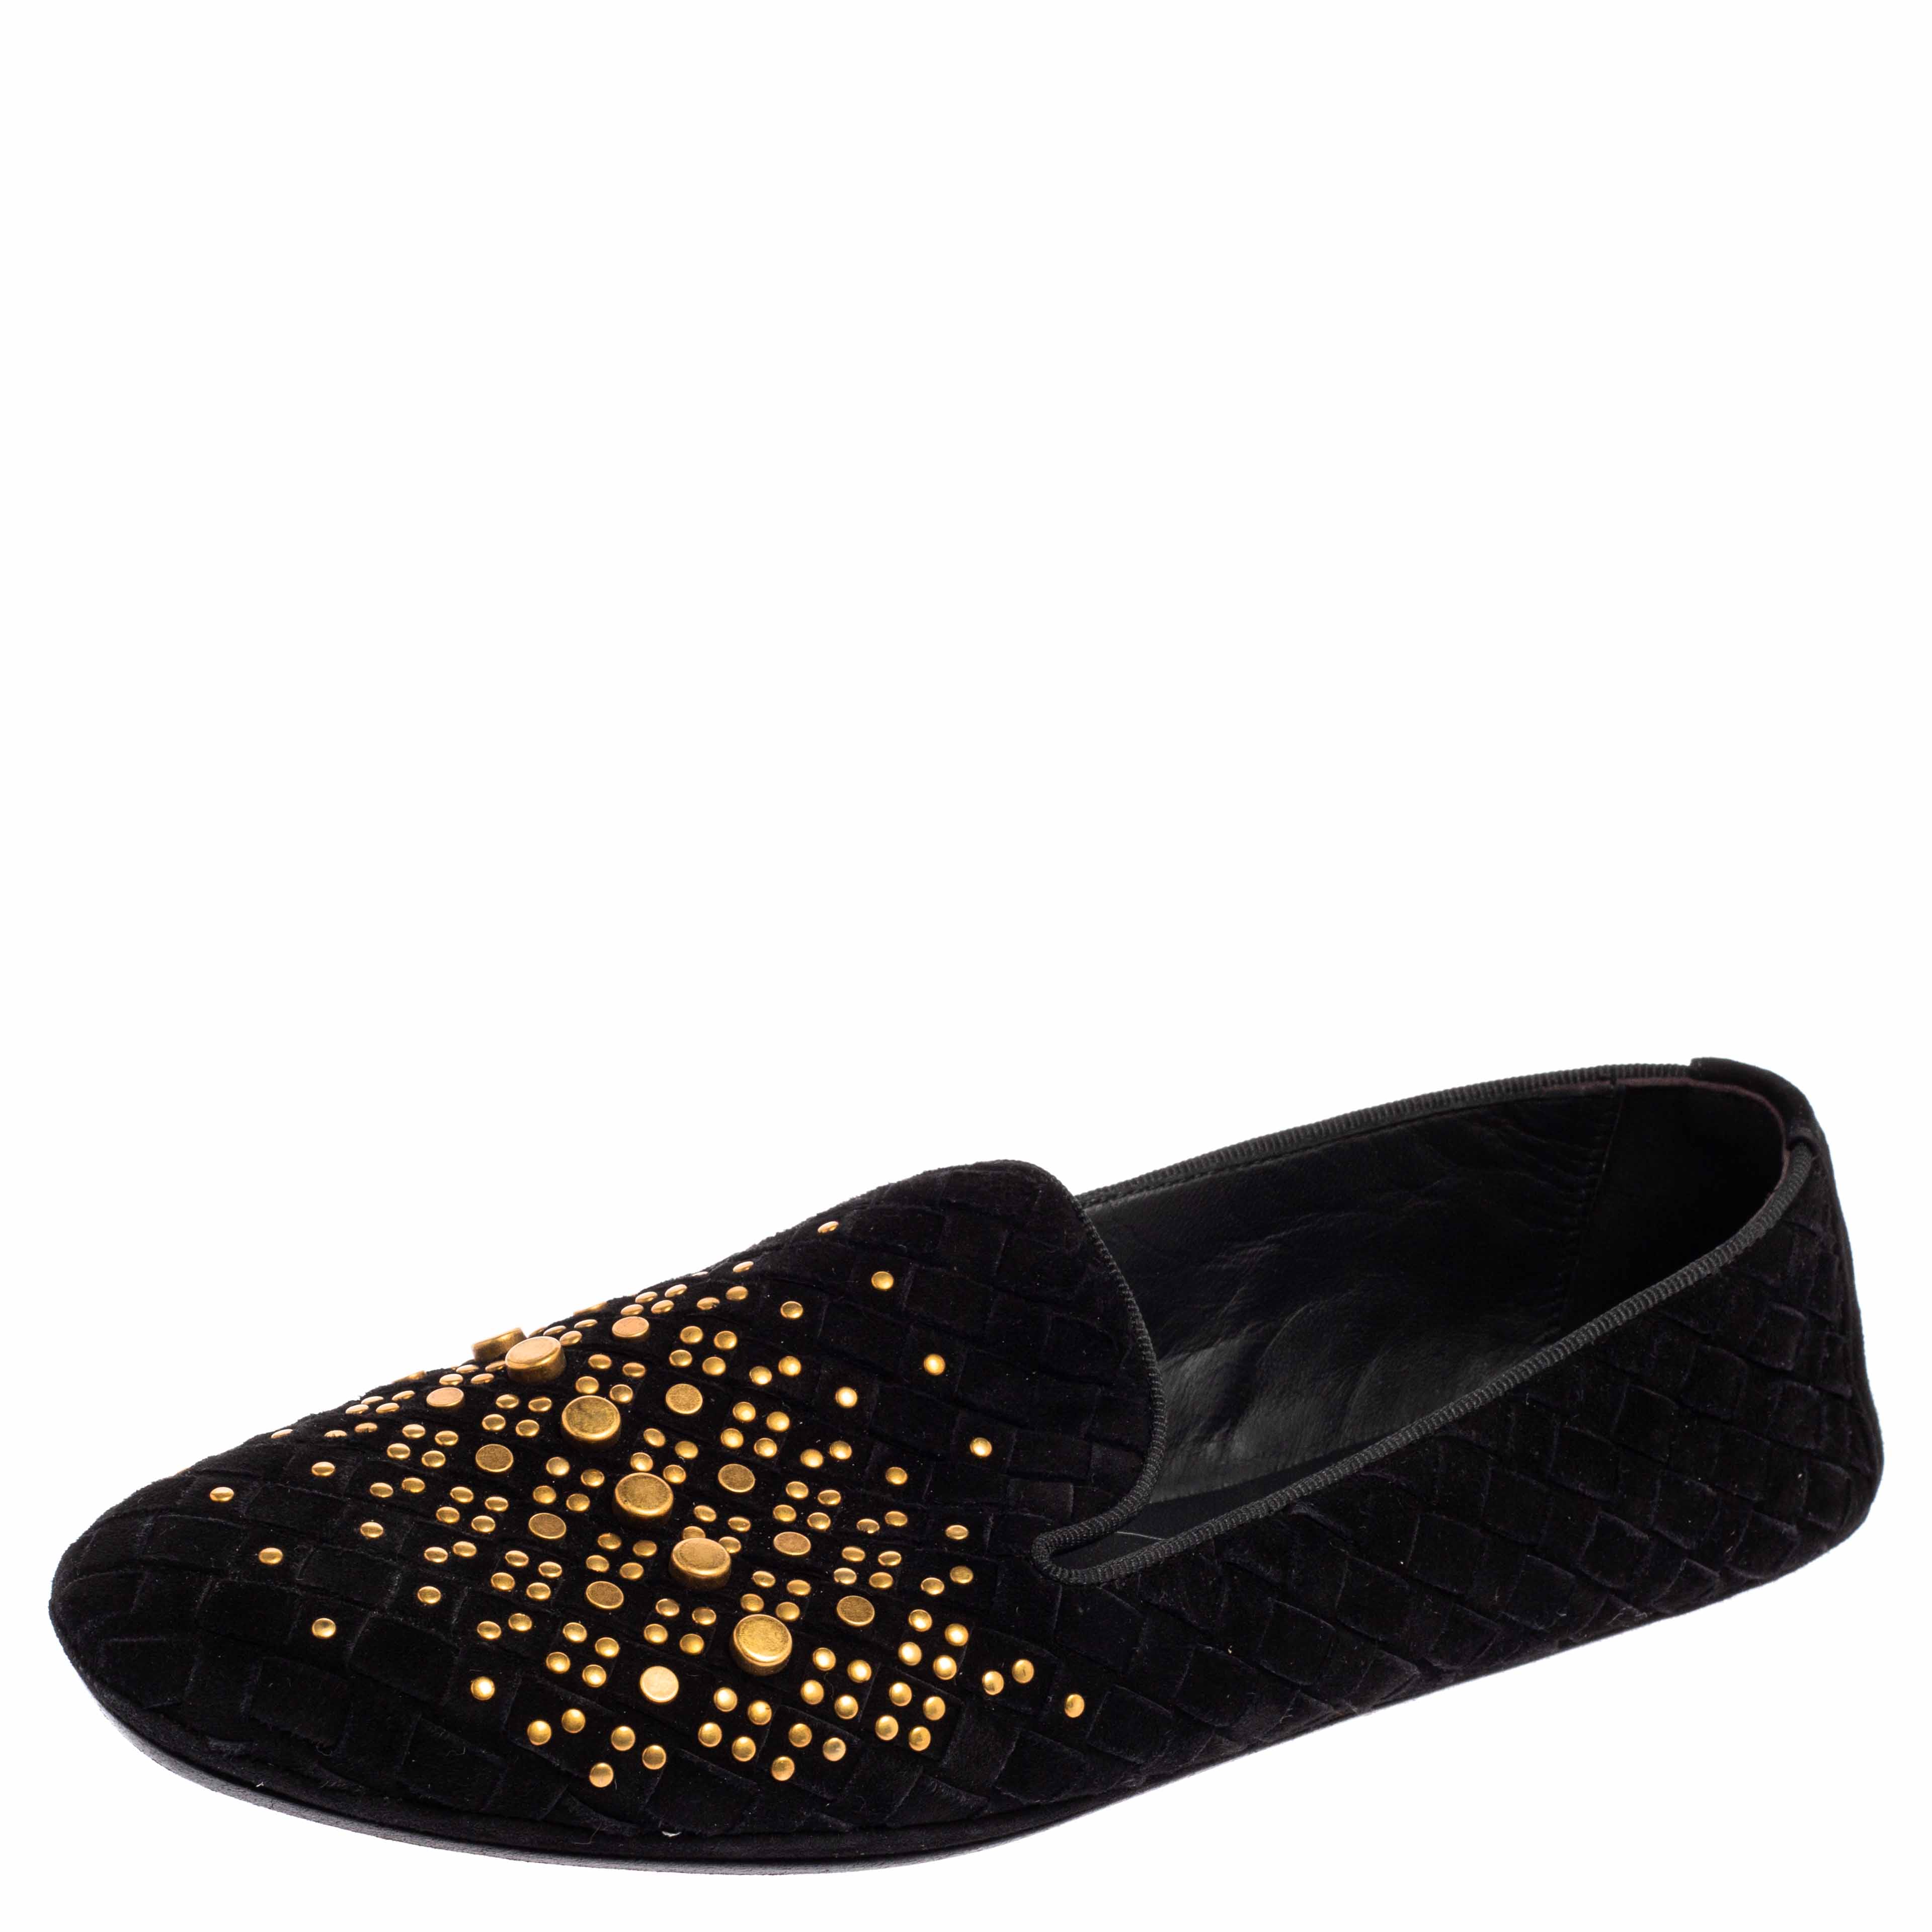 Bottega veneta black interecciato suede studded smoking slippers size 36